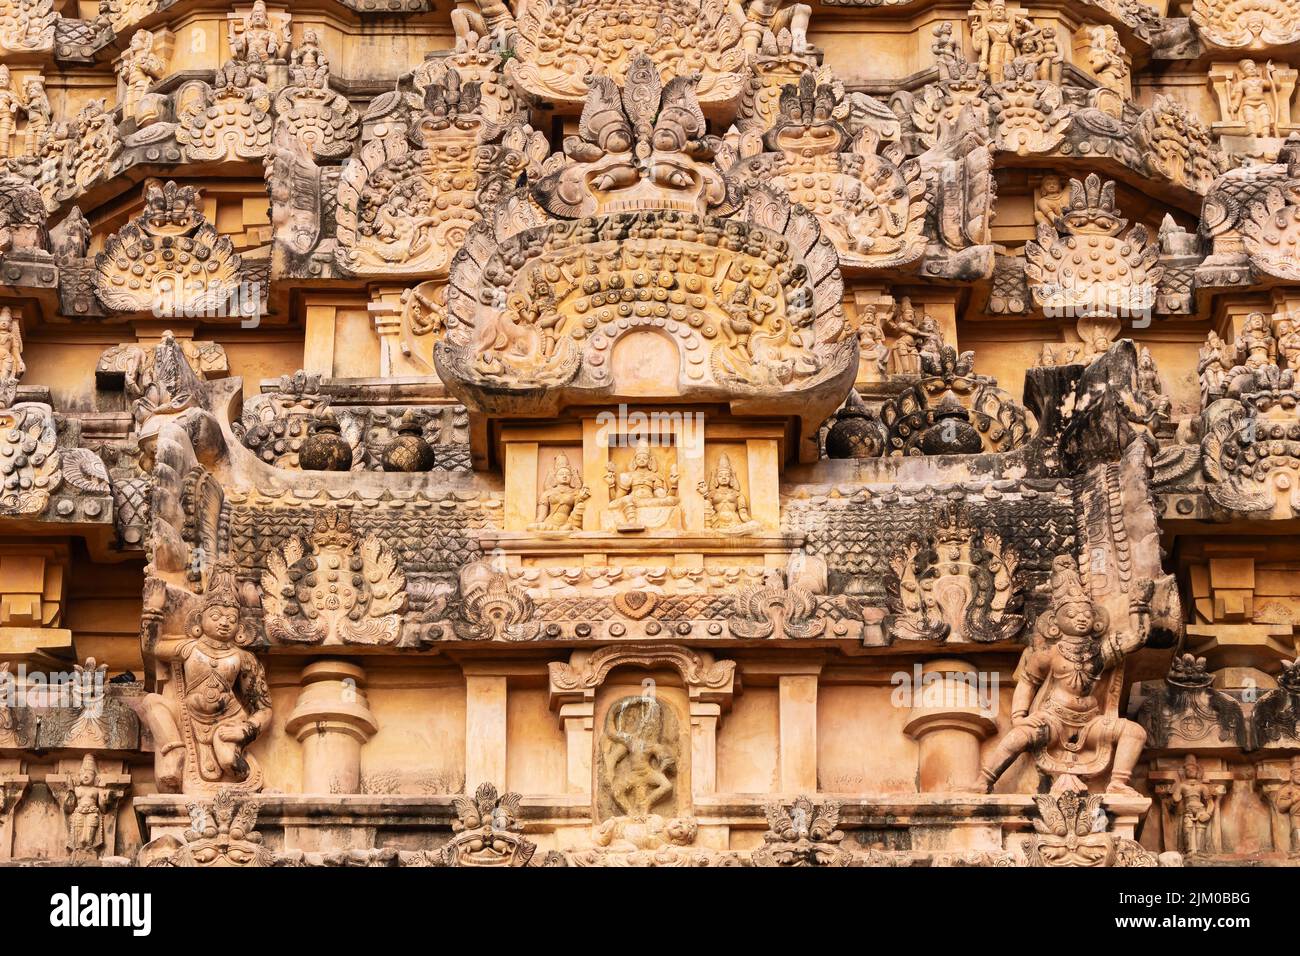 Esculturas de Dioses Hindúes en el templo de Brihadeshwara Temple, Gangaikonda Cholapuram, Ariyalur, Tamilnadu, India. Foto de stock